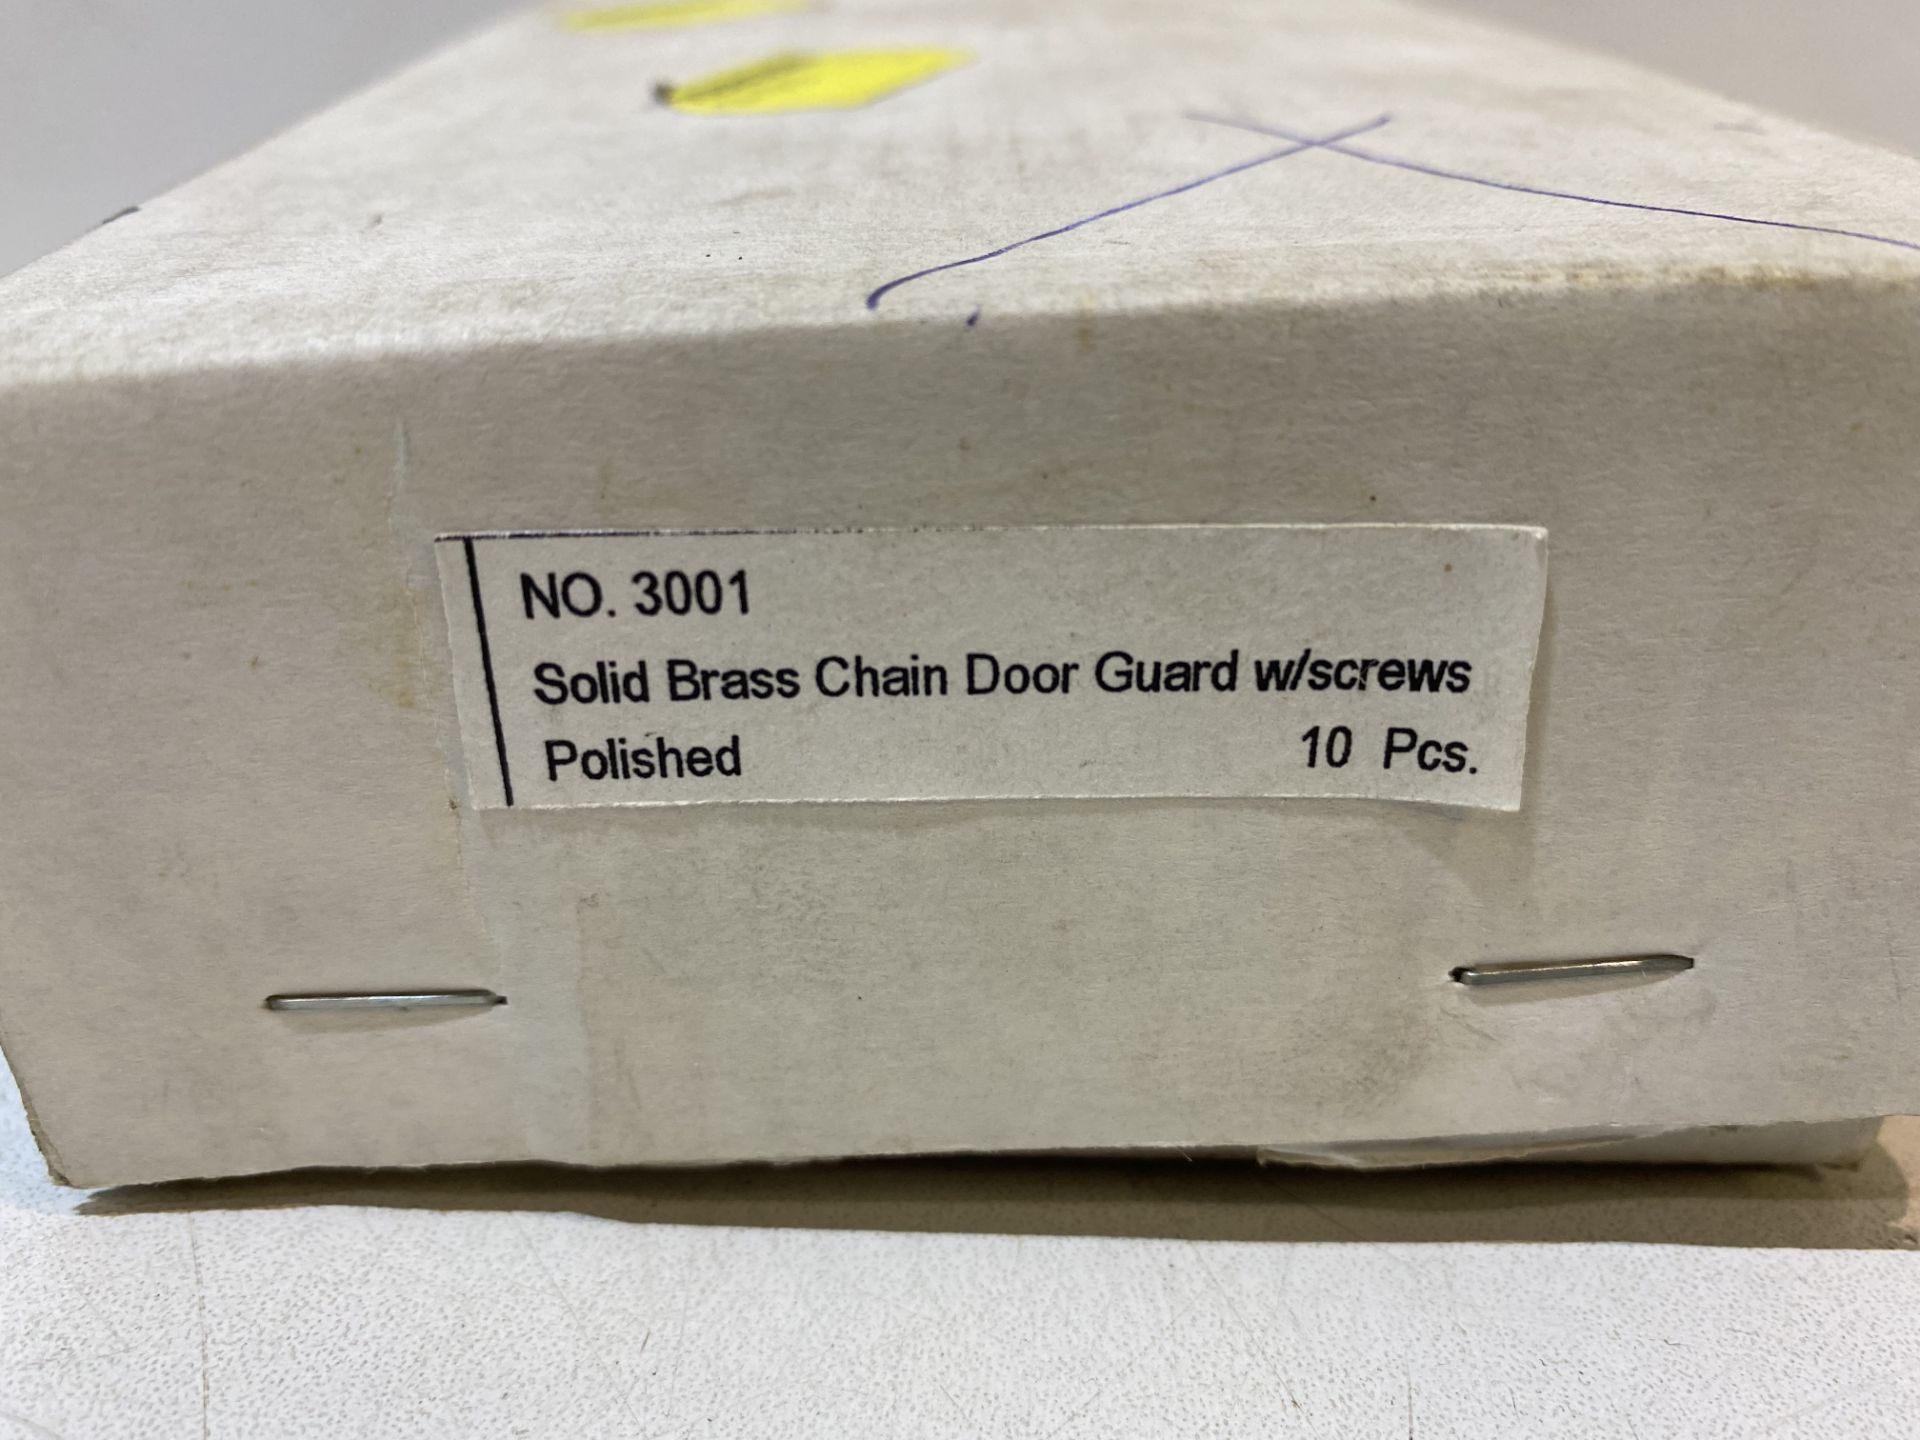 Mixed Lot Of Various Door Escutcheons & Door Guards/Chains - See Description & Photos - Image 4 of 8